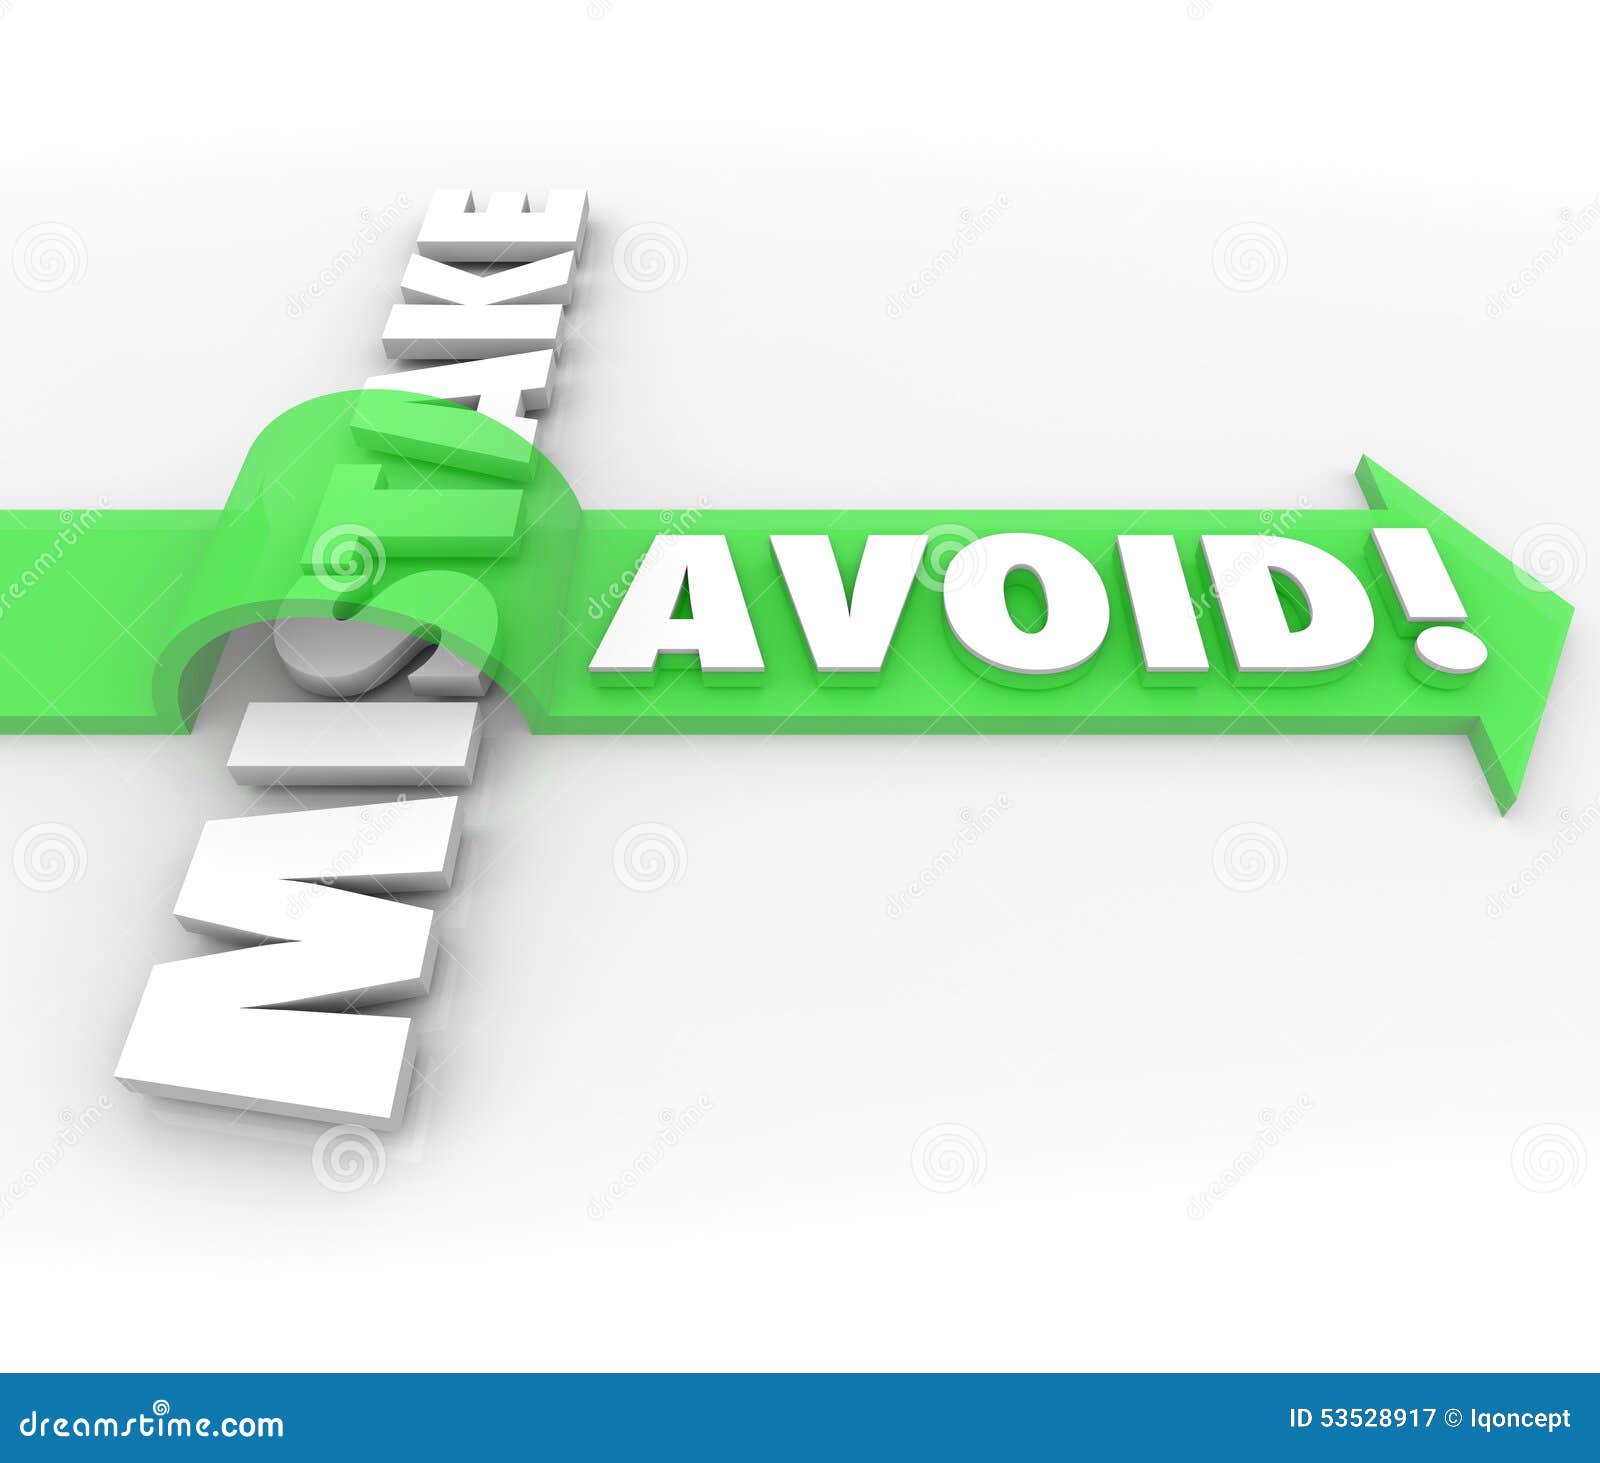 avoid mistake arrow over word prevent problem error